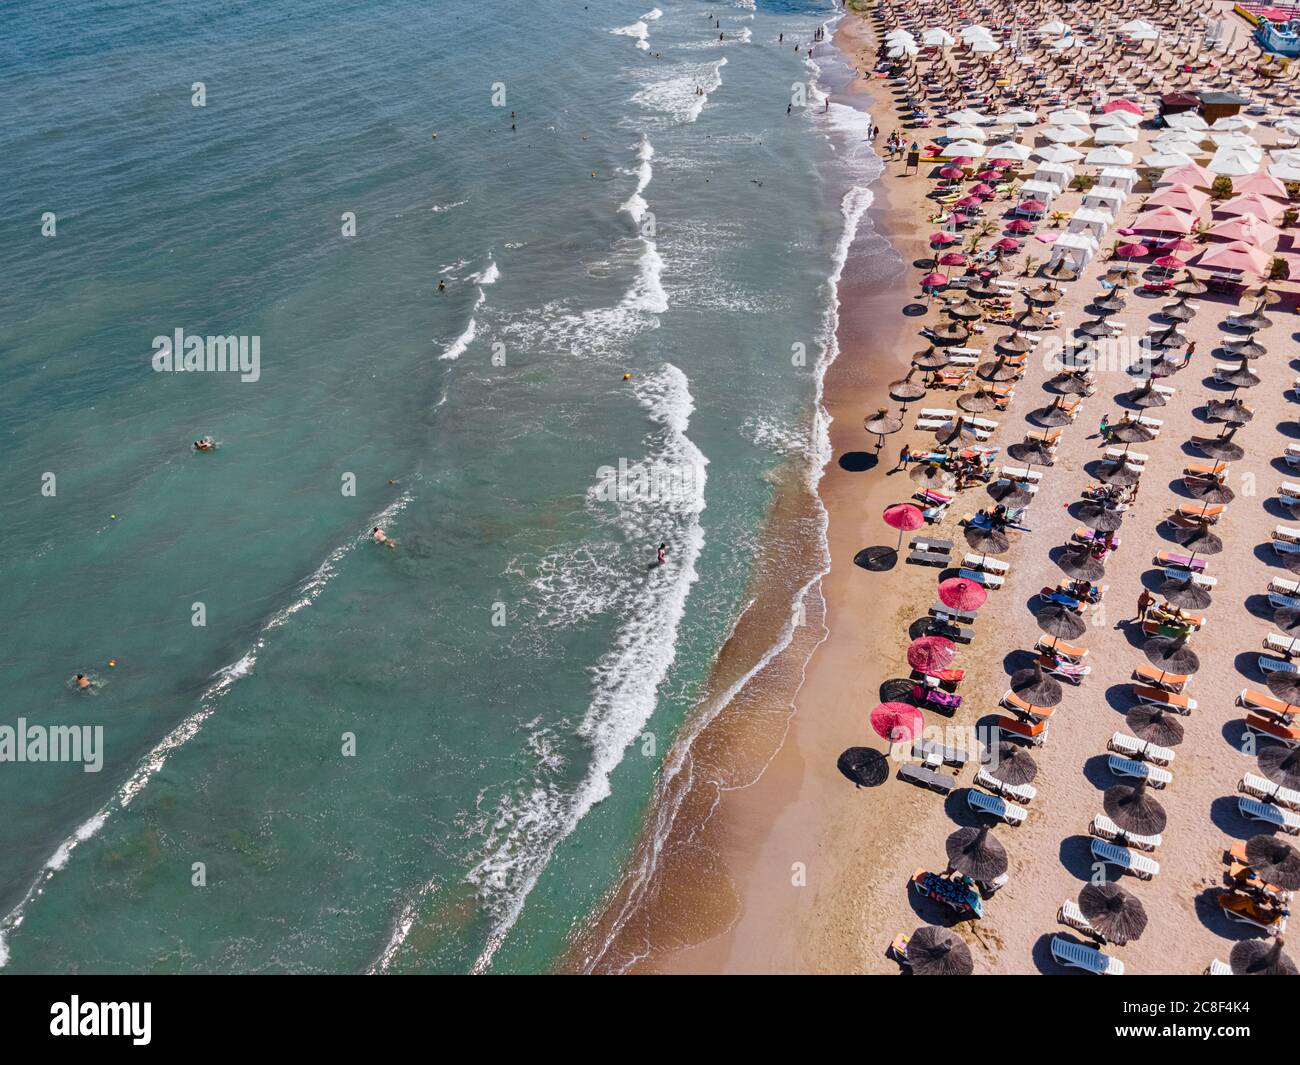 Luftstrand, Menschen Und Bunte Sonnenschirme Am Strand Fotografie, Blue Ocean Landschaft, Meereswellen Stockfoto